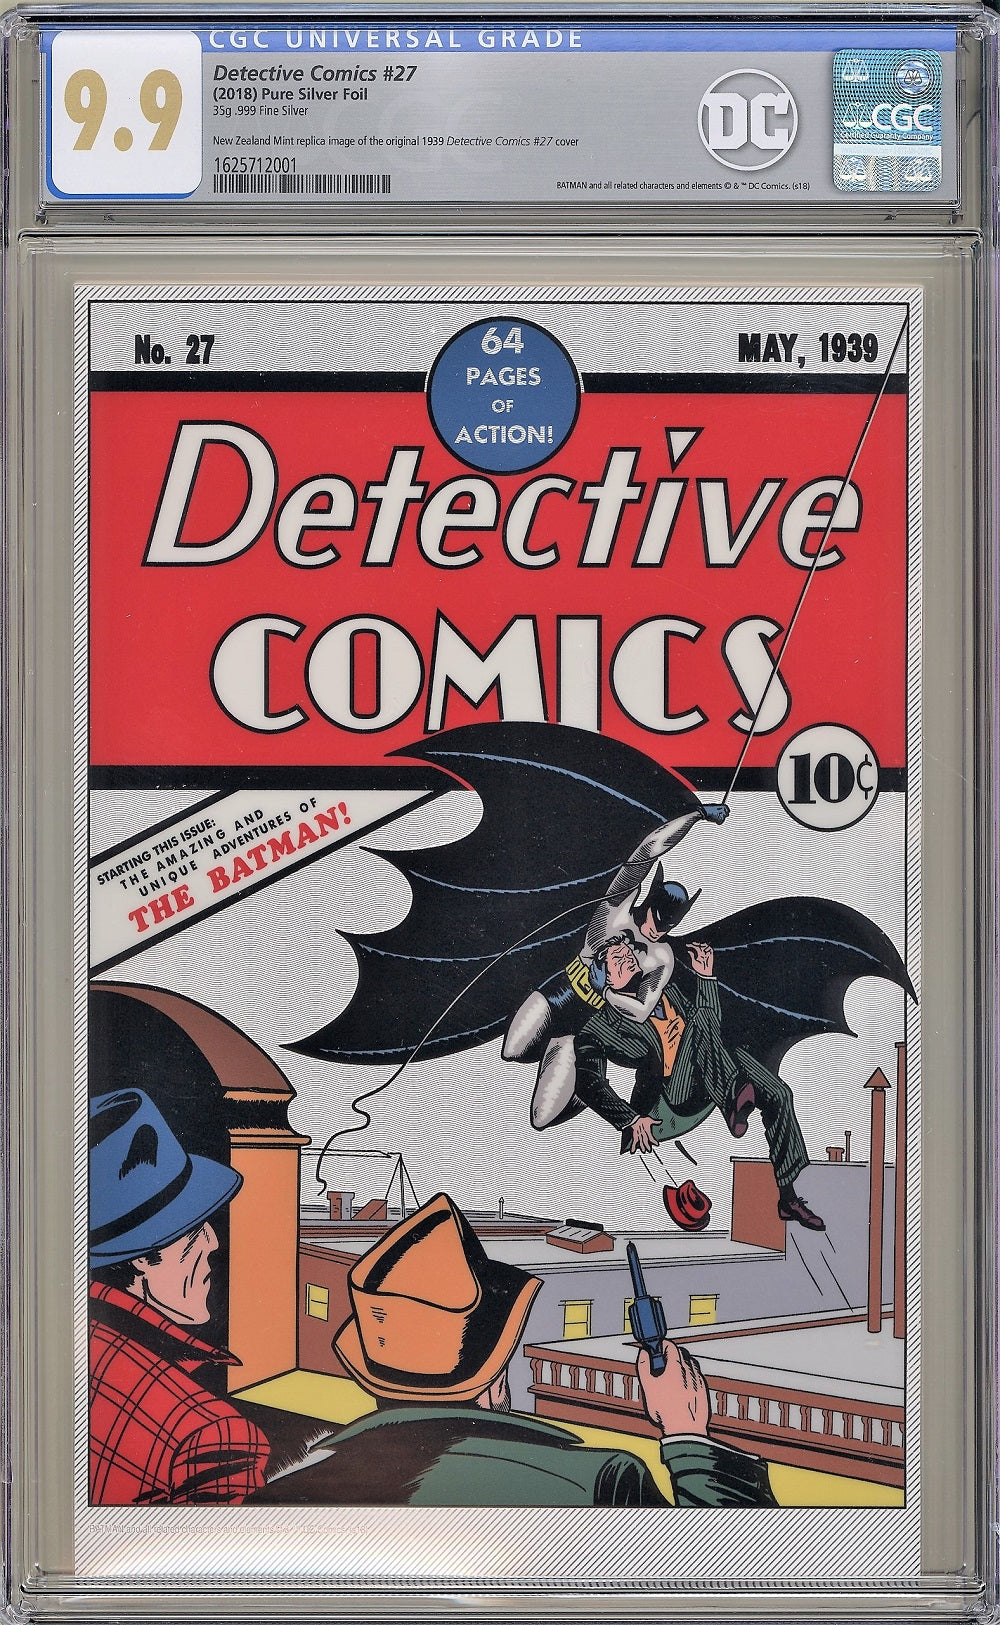 CGC DETECTIVE COMICS #27 - 35g PURE SILVER FOIL (9.9) - Kings Comics